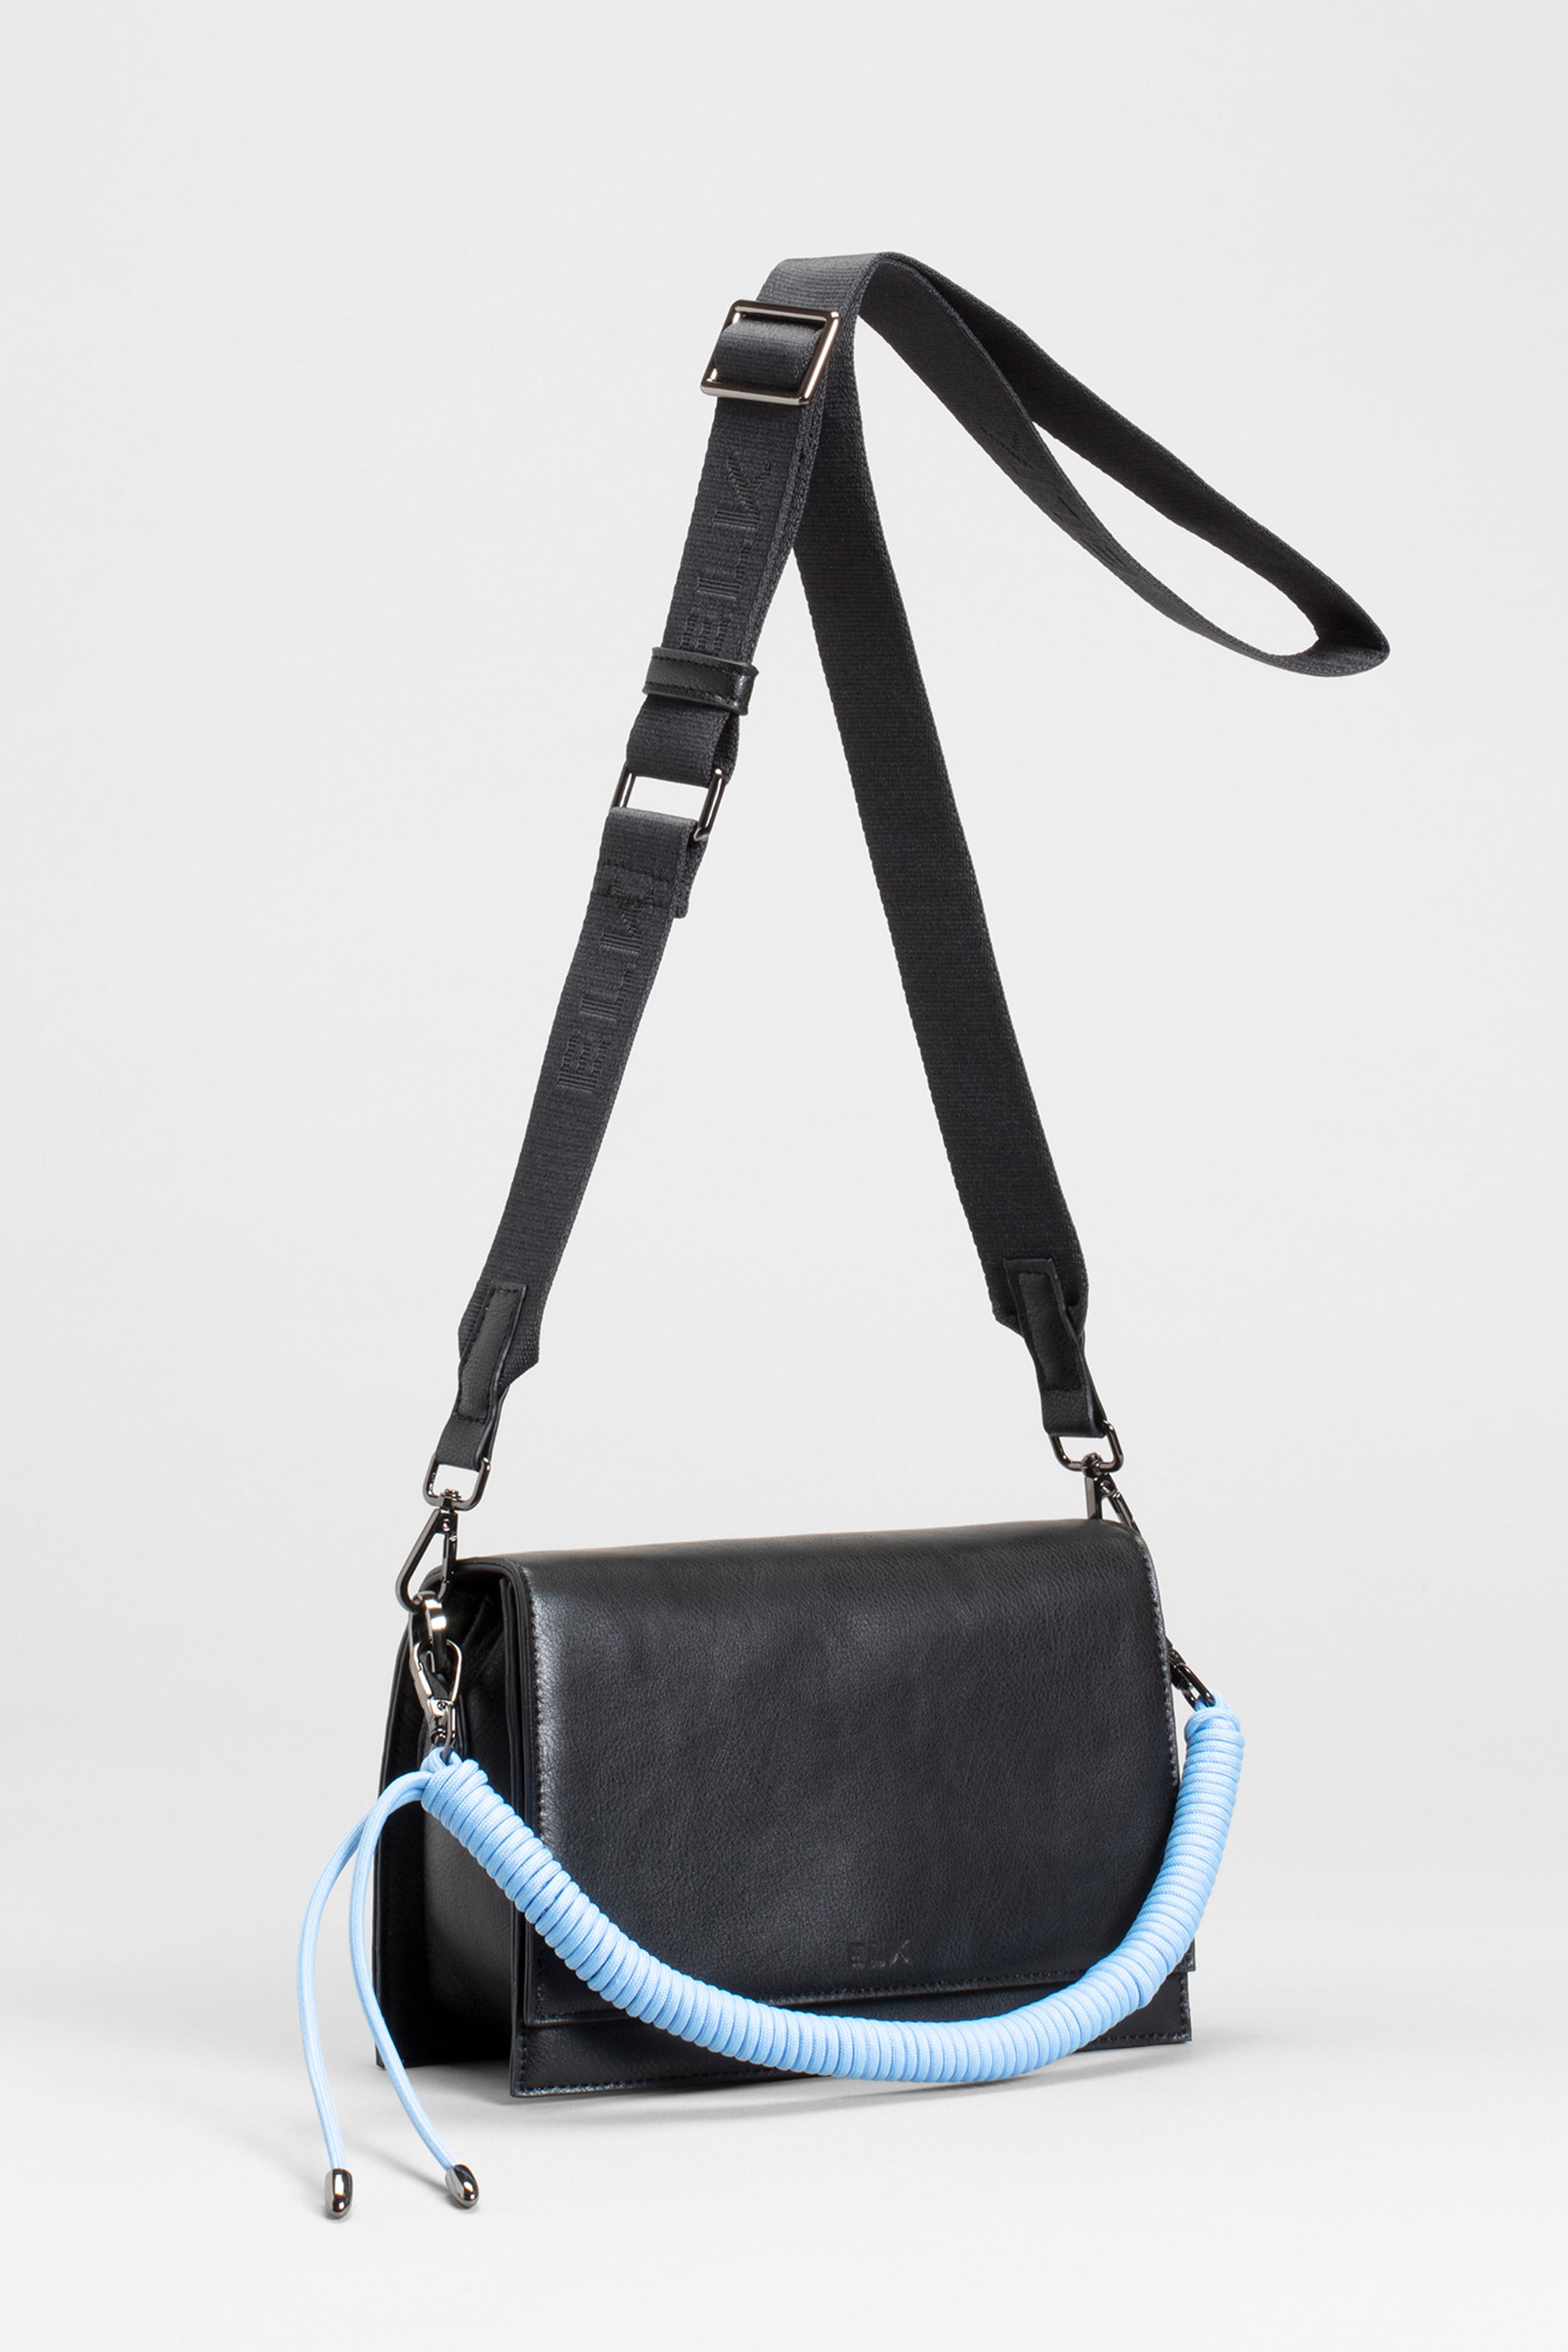 Johto Vegan Leather and Recycled Material Crossbody Handbag Front BLACK